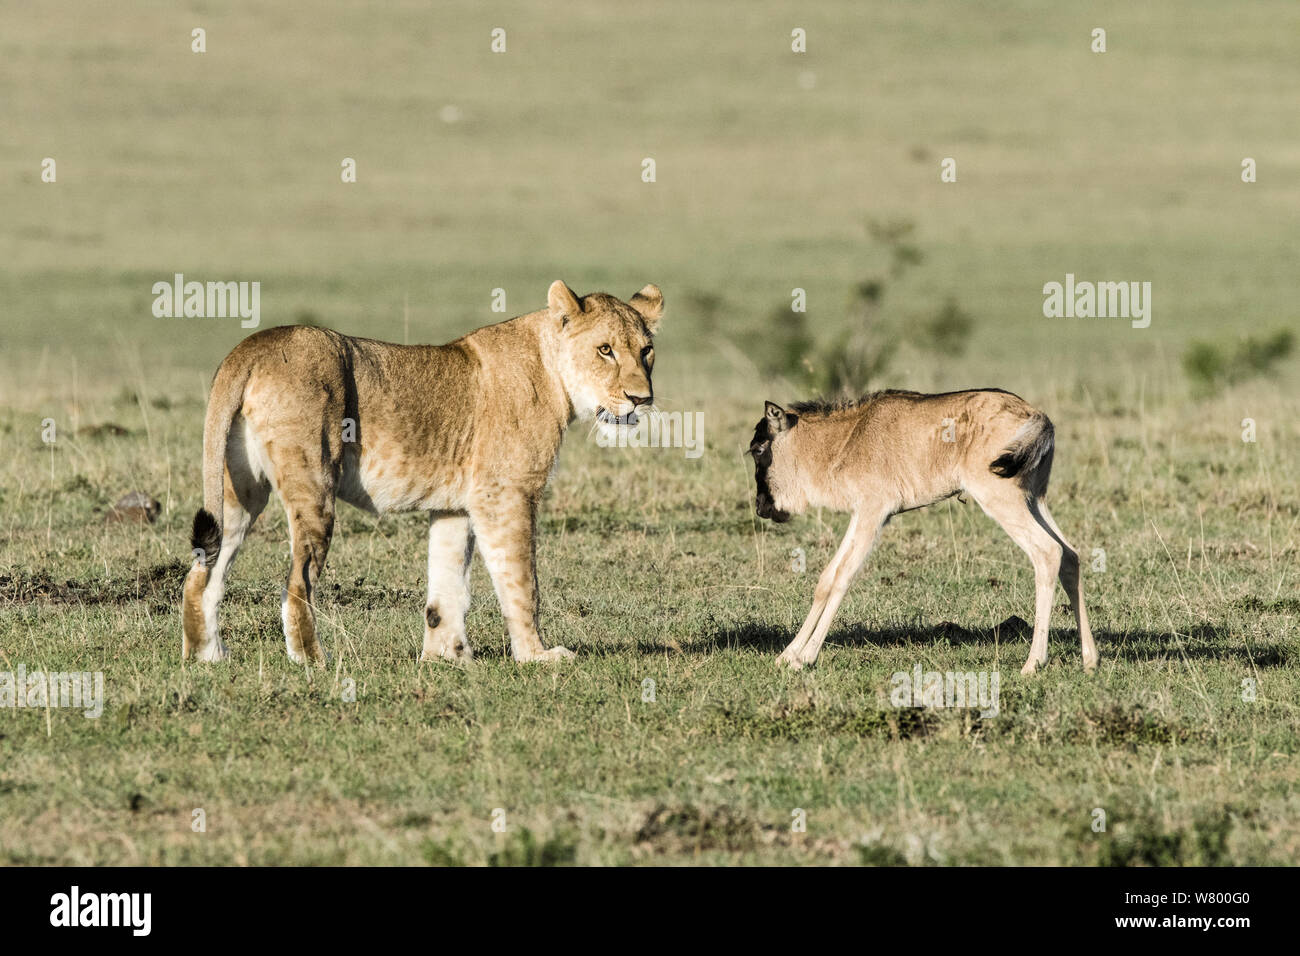 León (Panthera leo) jugando con bebes perdidos (Ñus Connochaetes taurinus), Masai-Mara Game Reserve, Kenya. Foto de stock